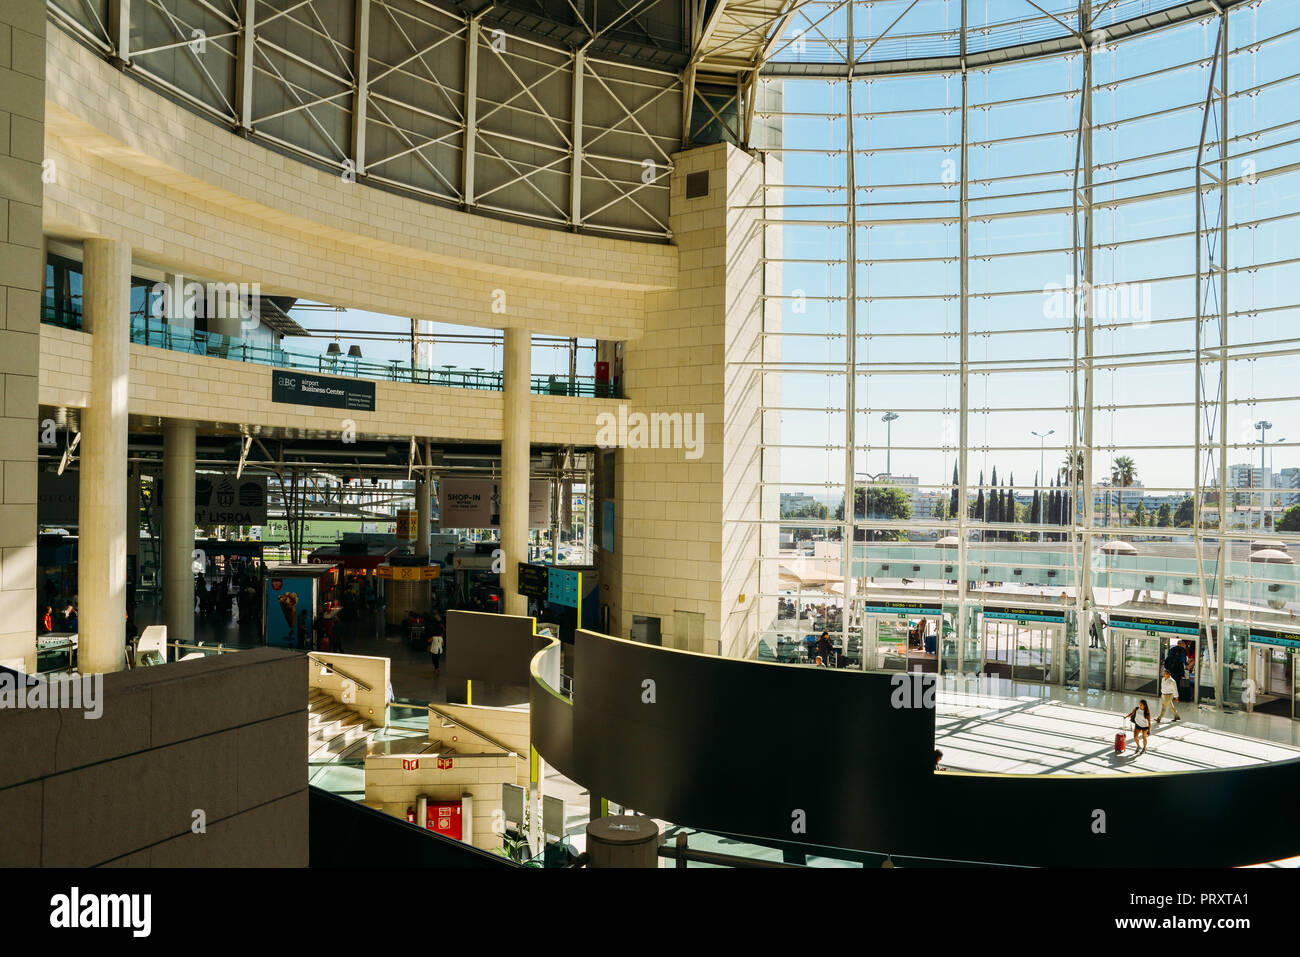 Lisbon Airport, Portugal - Oct 3, 2018:: Escalator at main entrance of Lisbon Humberto Delgado Airport Stock Photo